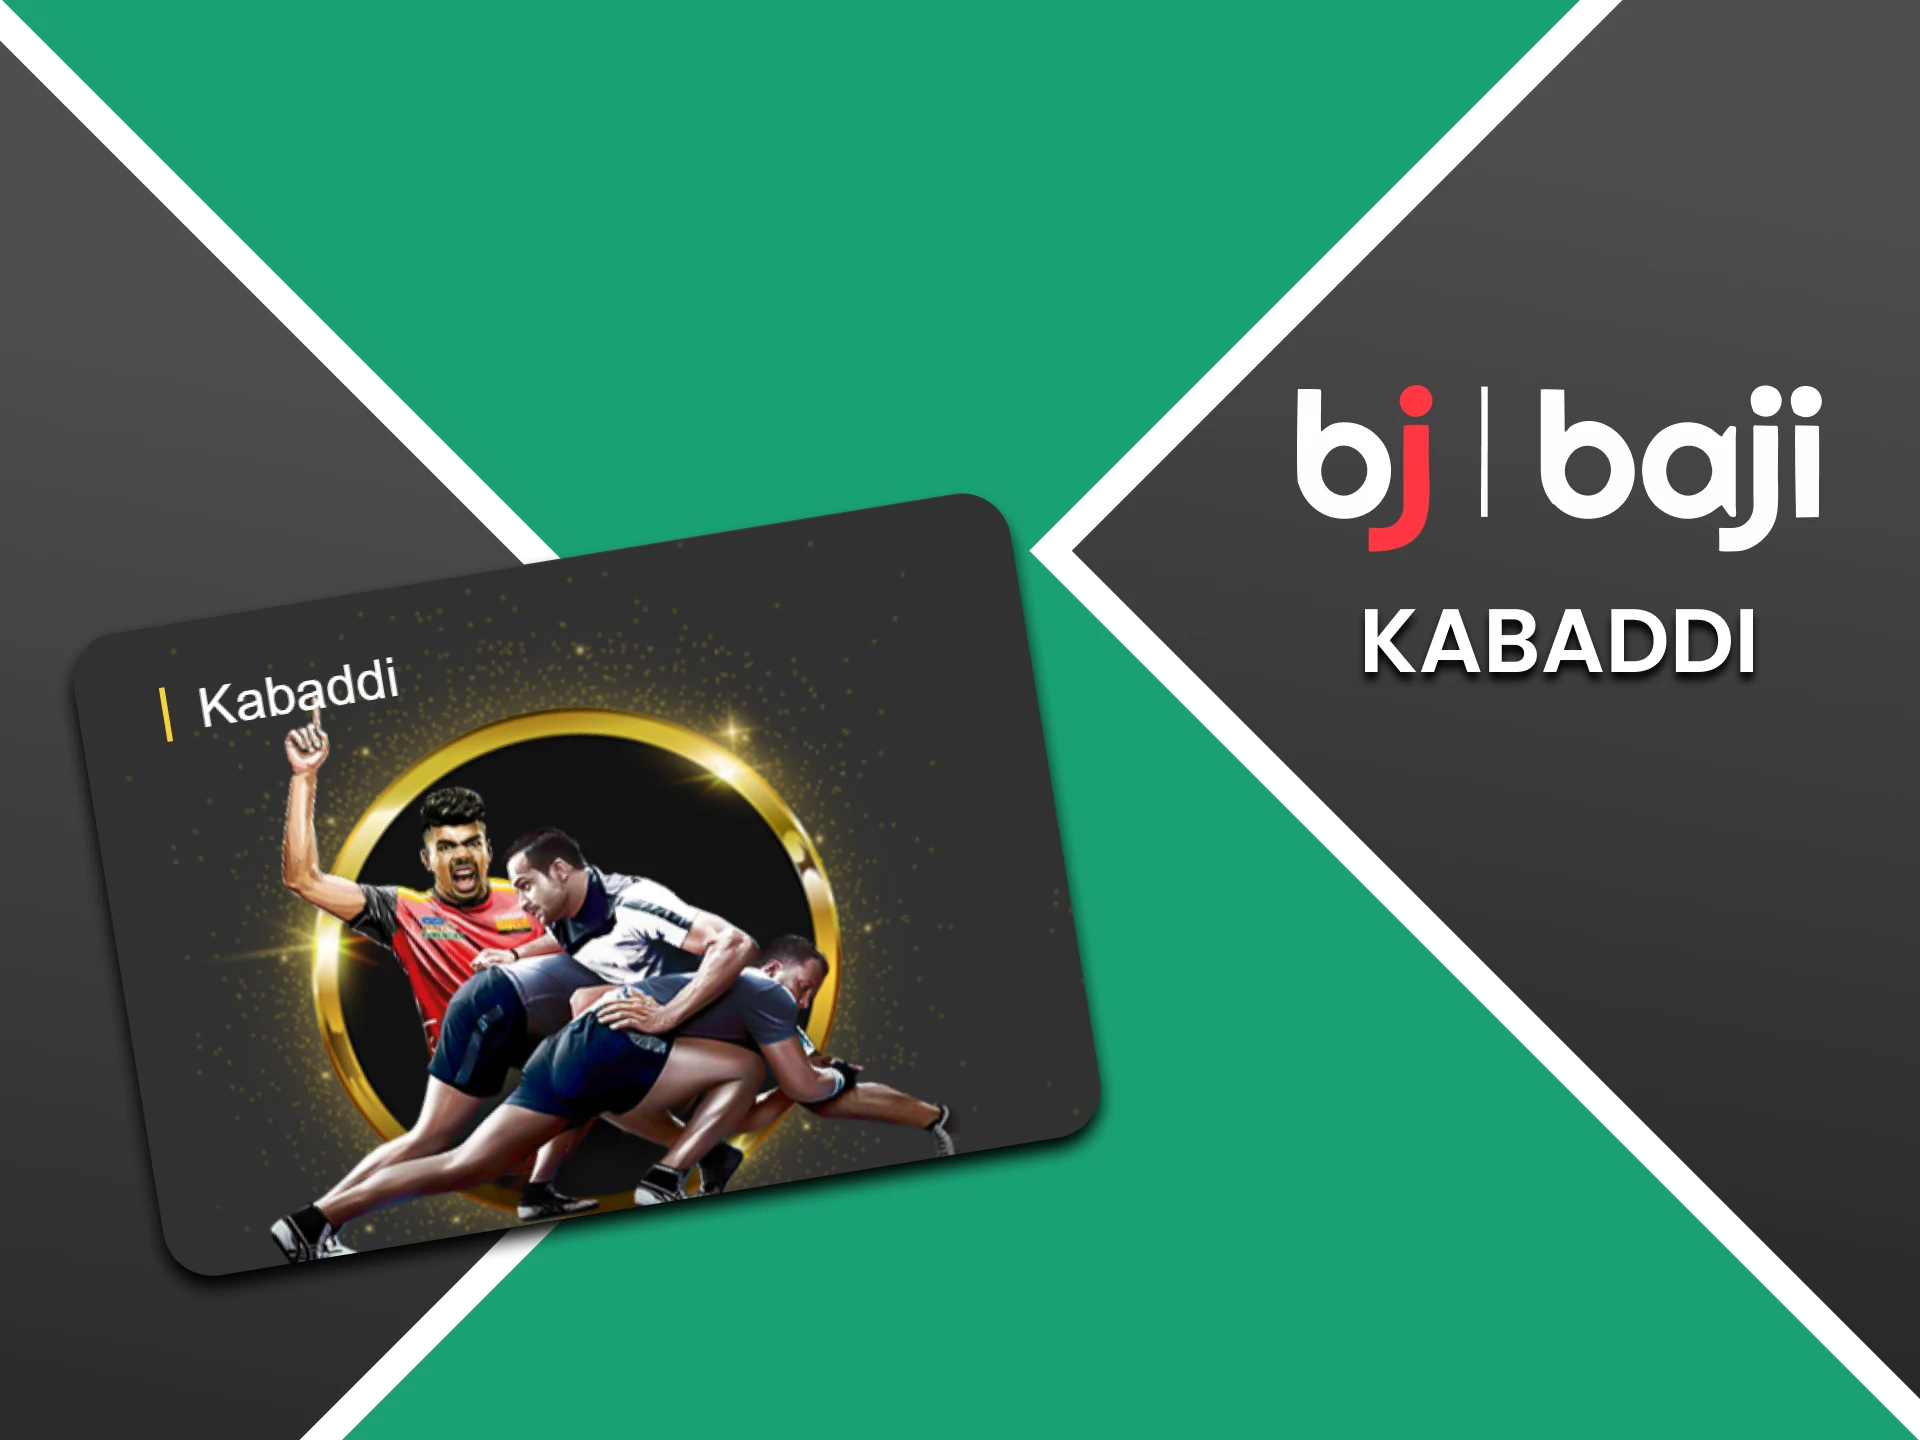 When betting on Baji, choose kabaddi.